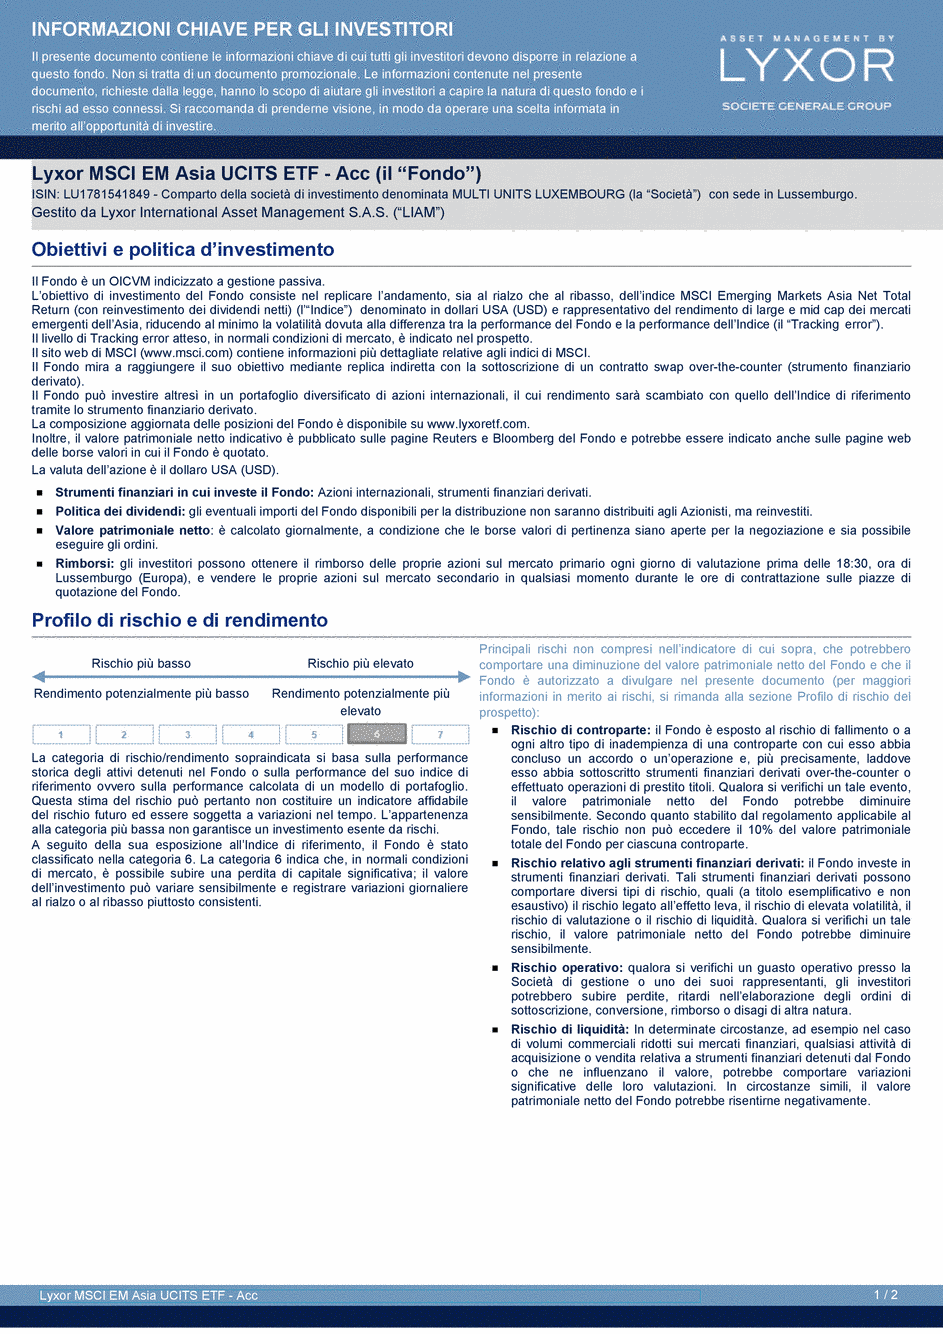 DICI Lyxor MSCI EM Asia UCITS ETF - Acc - 19/02/2021 - Italien